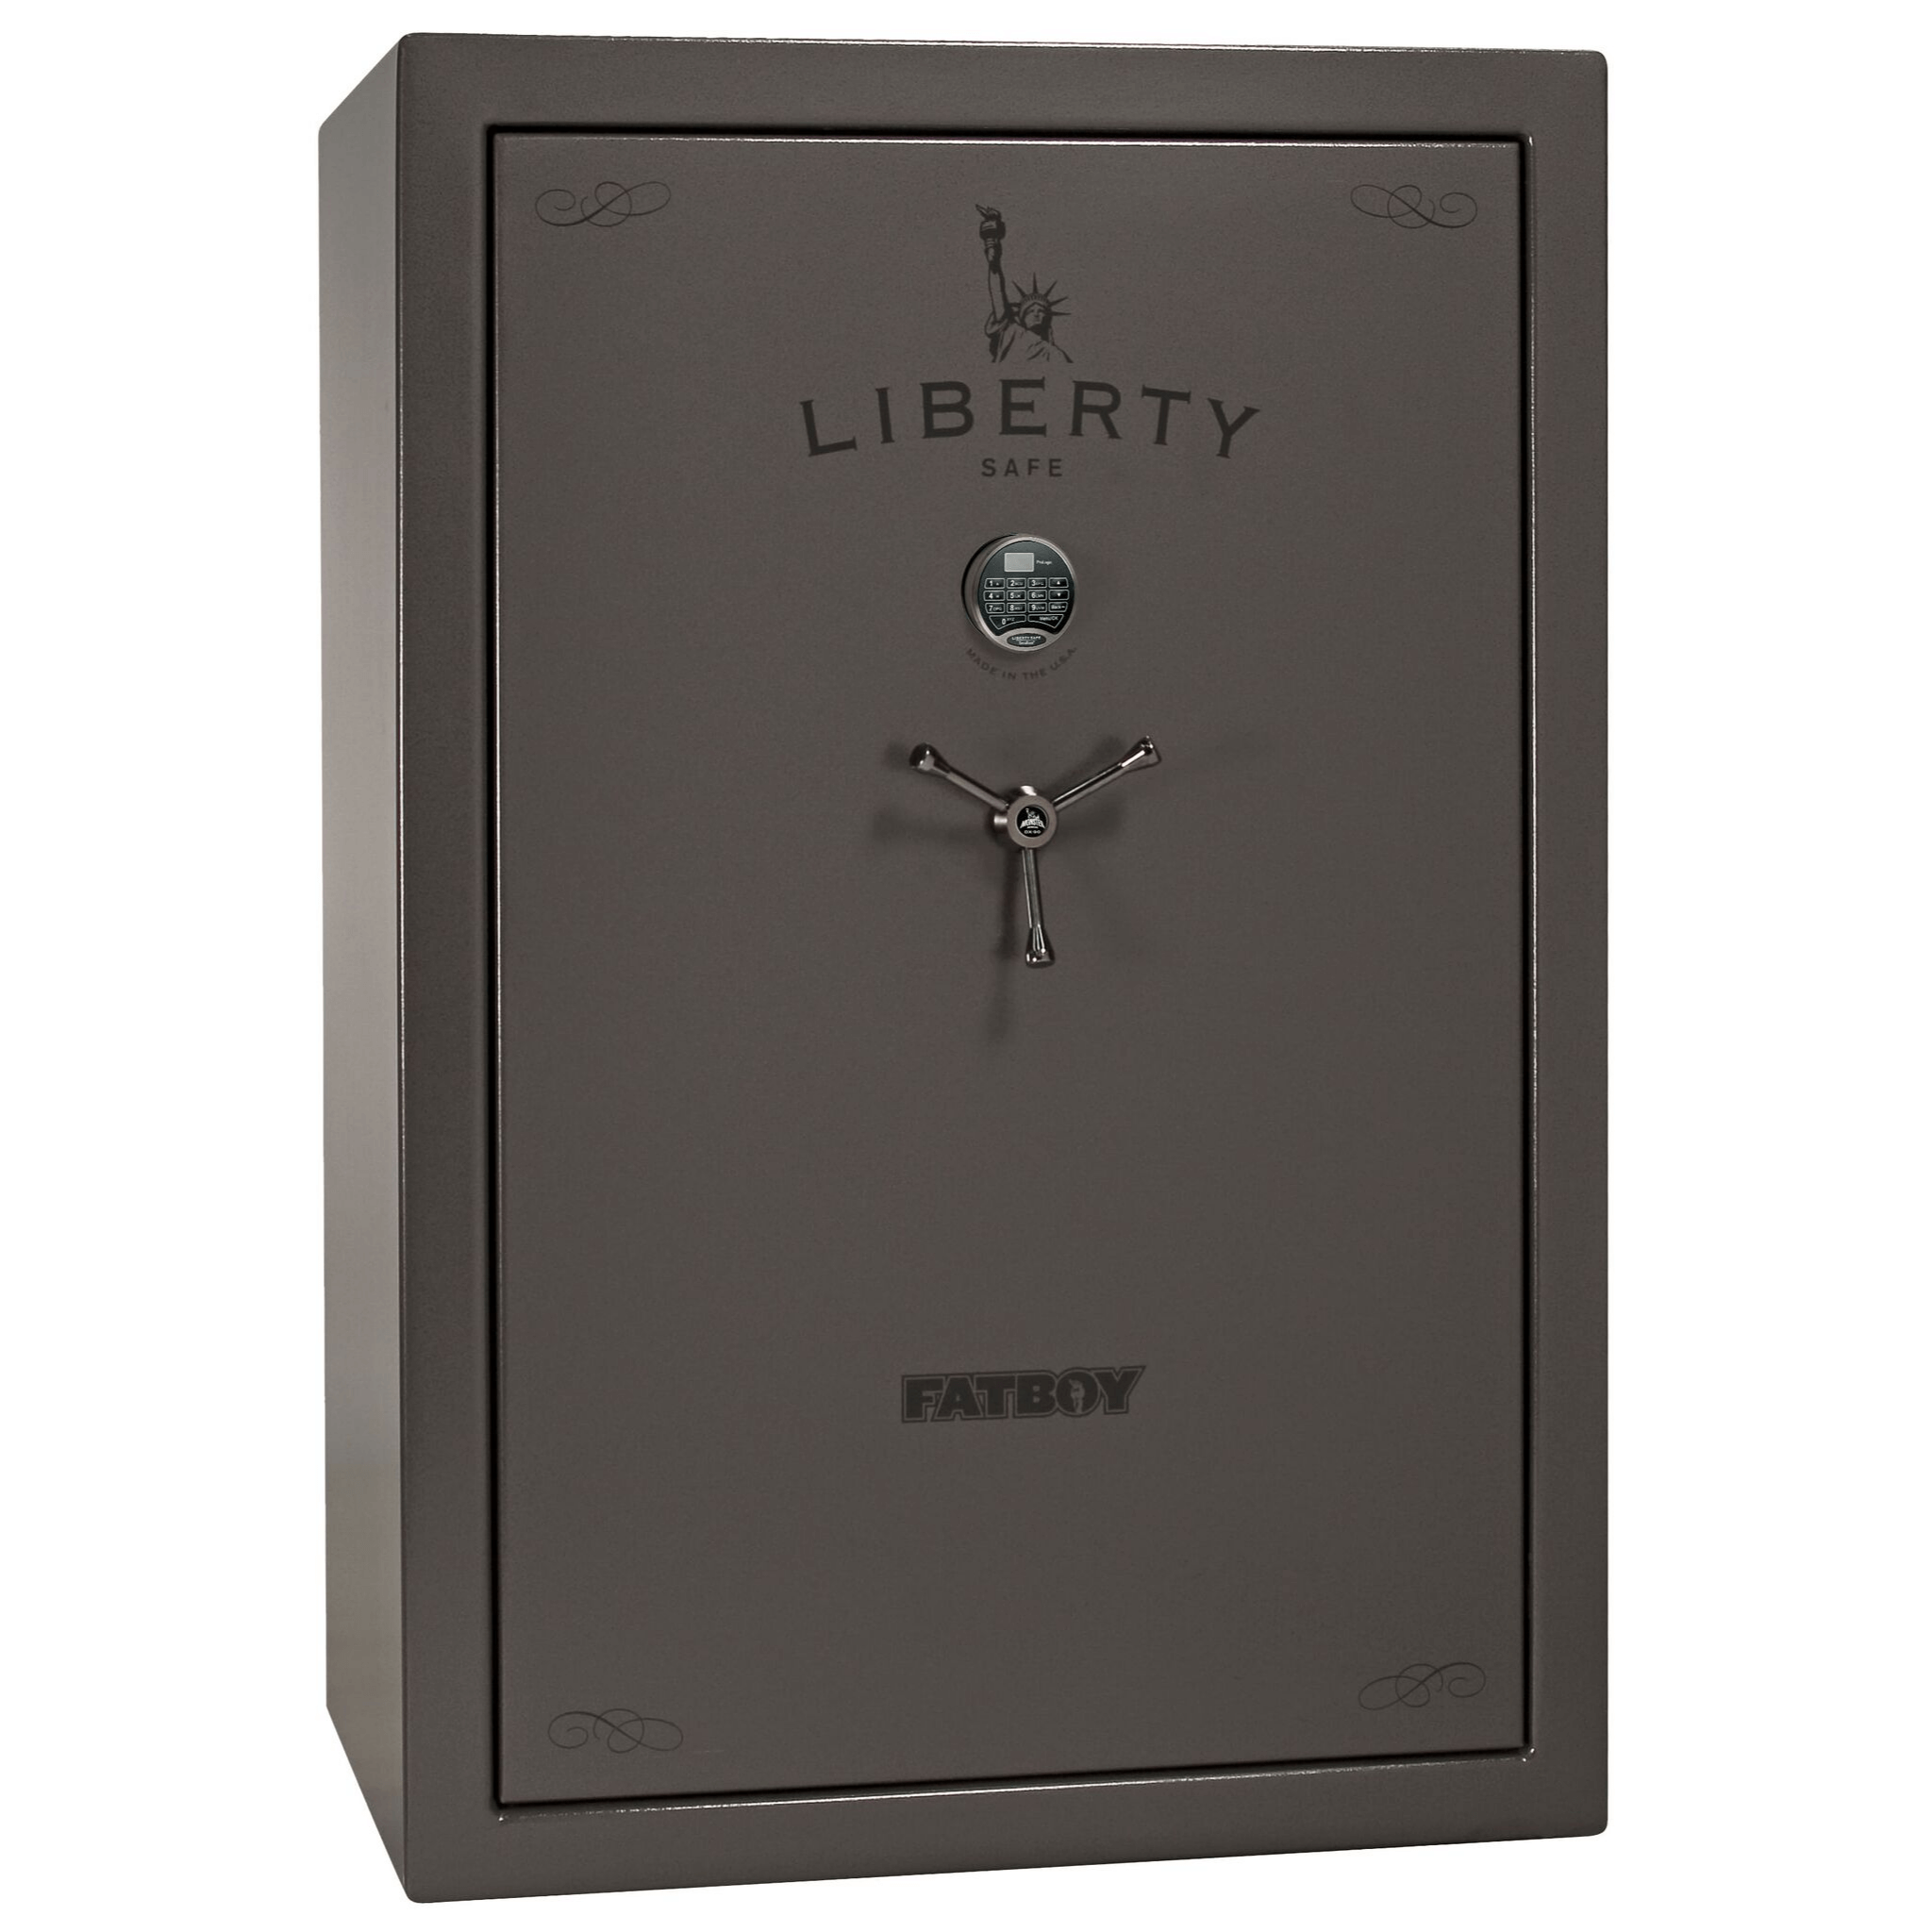 Liberty Fatboy Series Gun Safe Configurator, photo 23